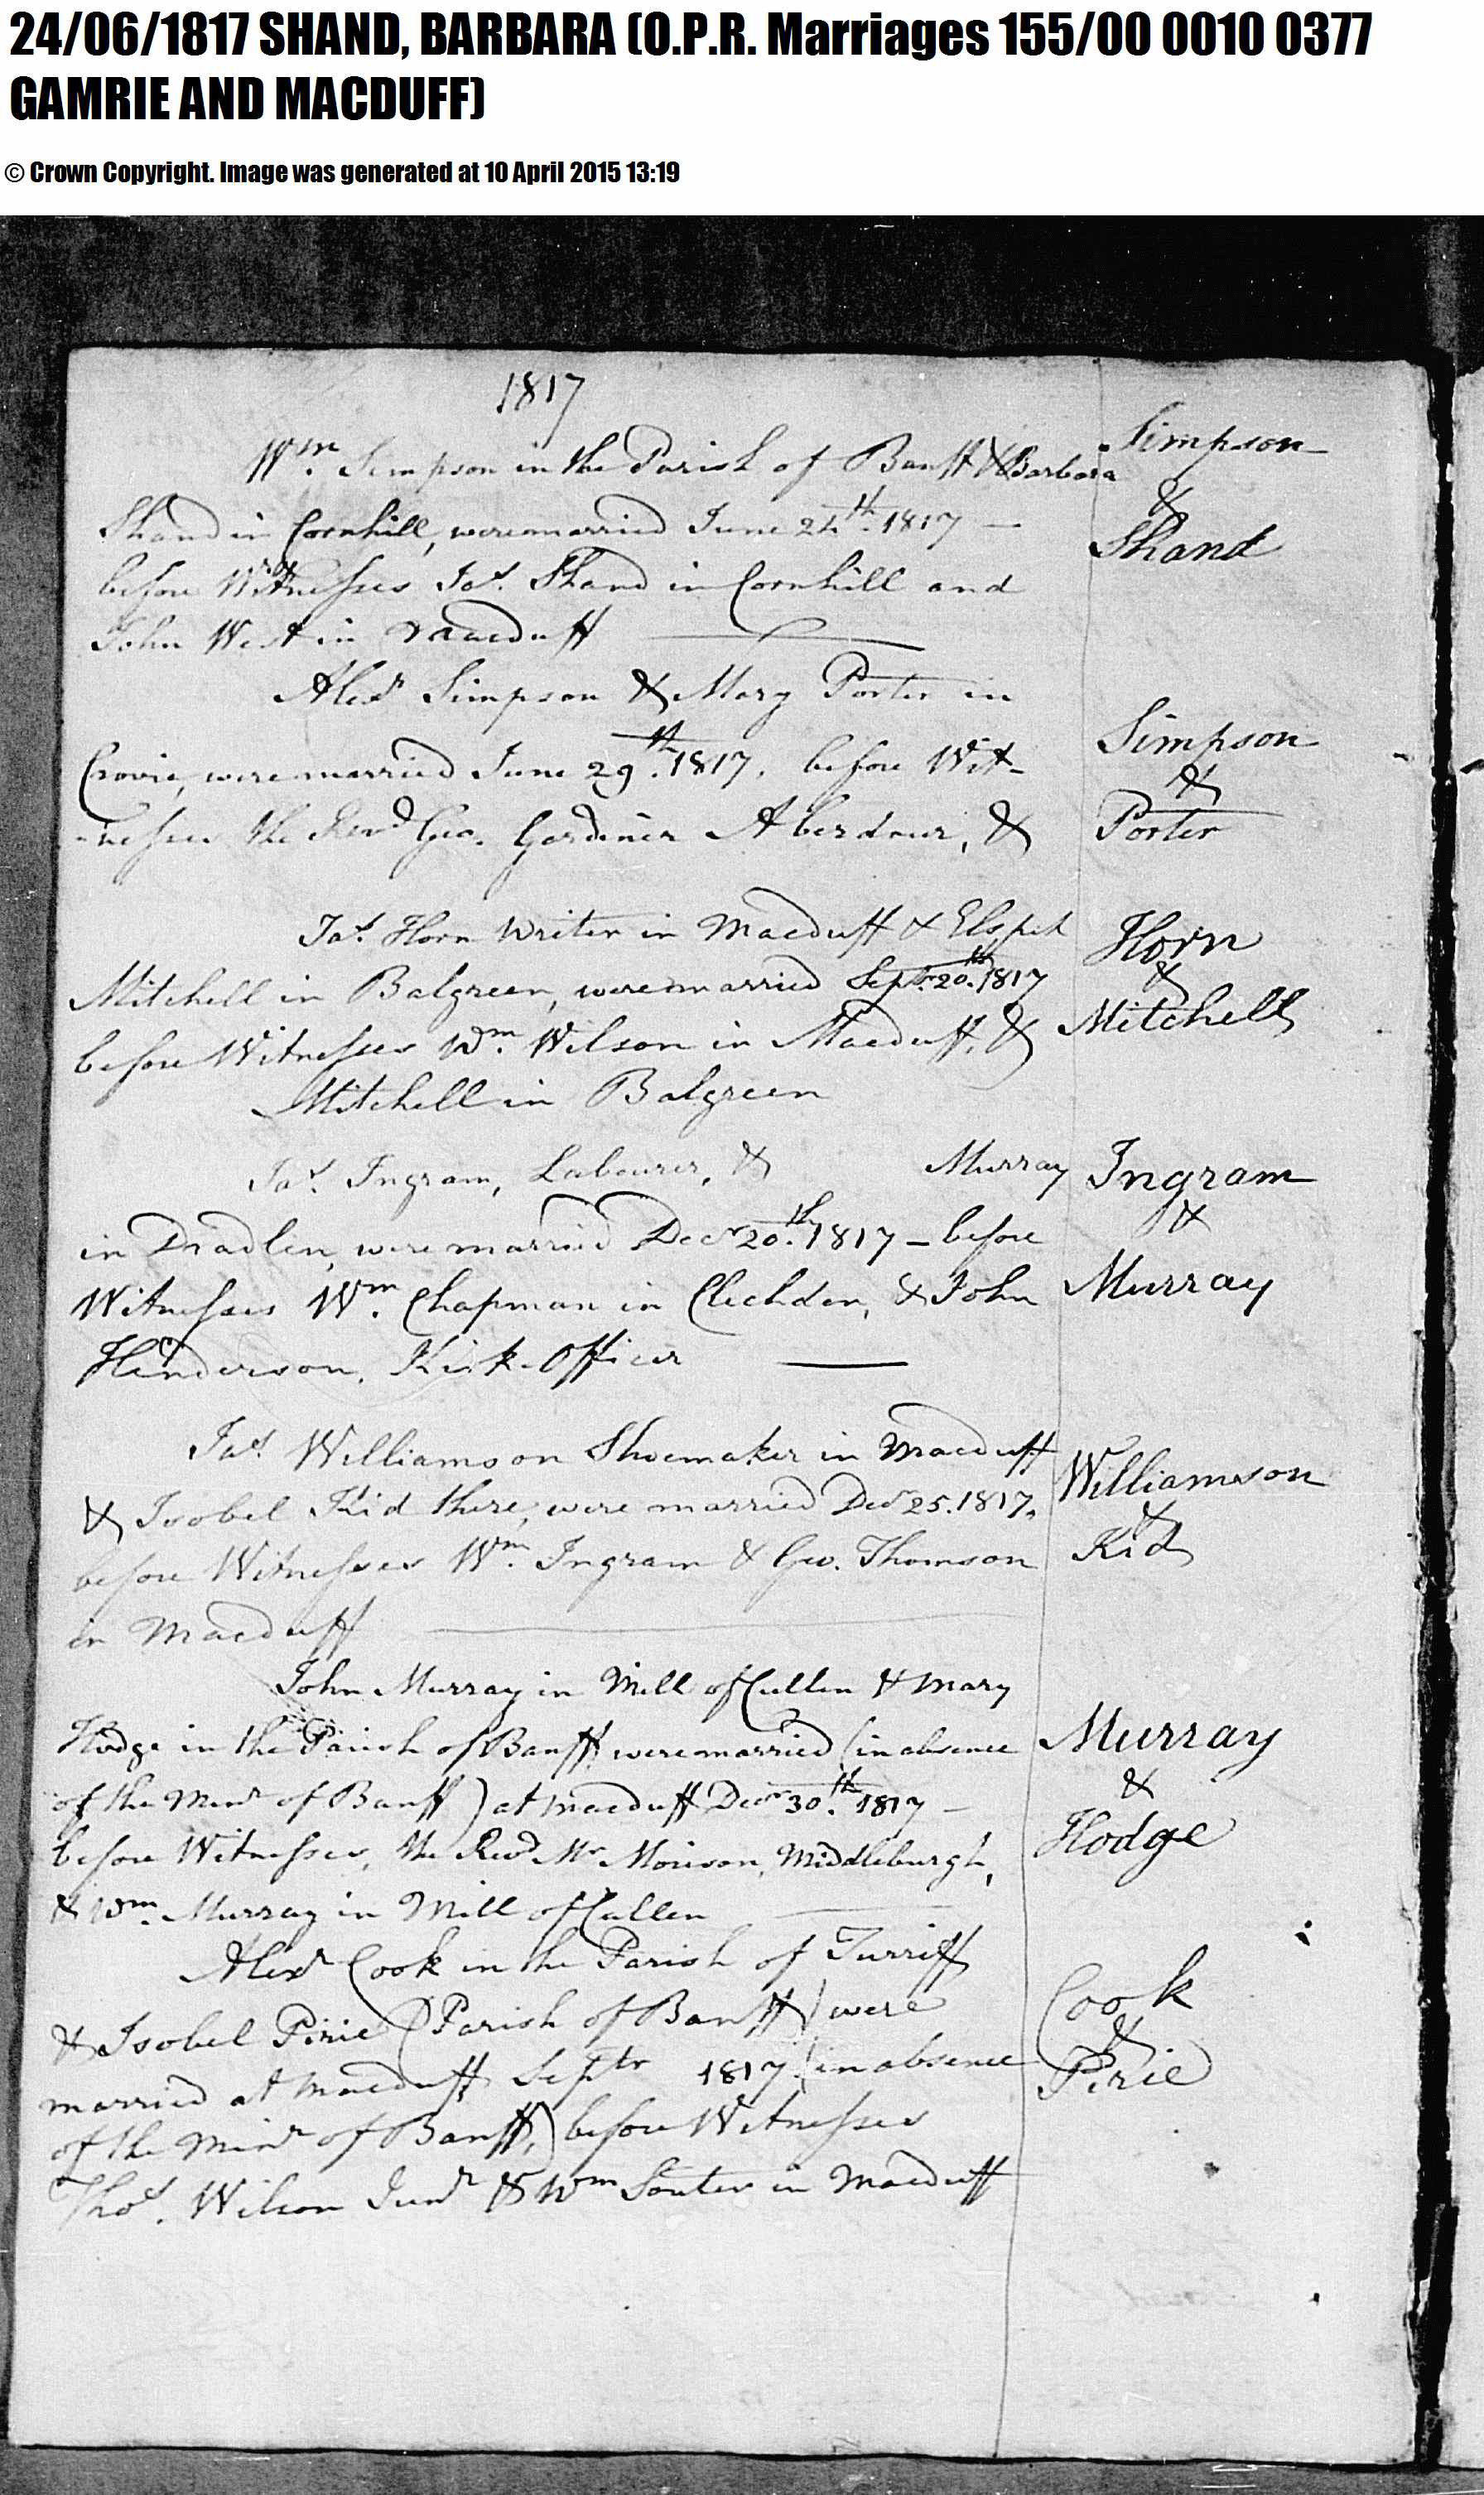 Barbara Shand Wm Simpson marriage 1817